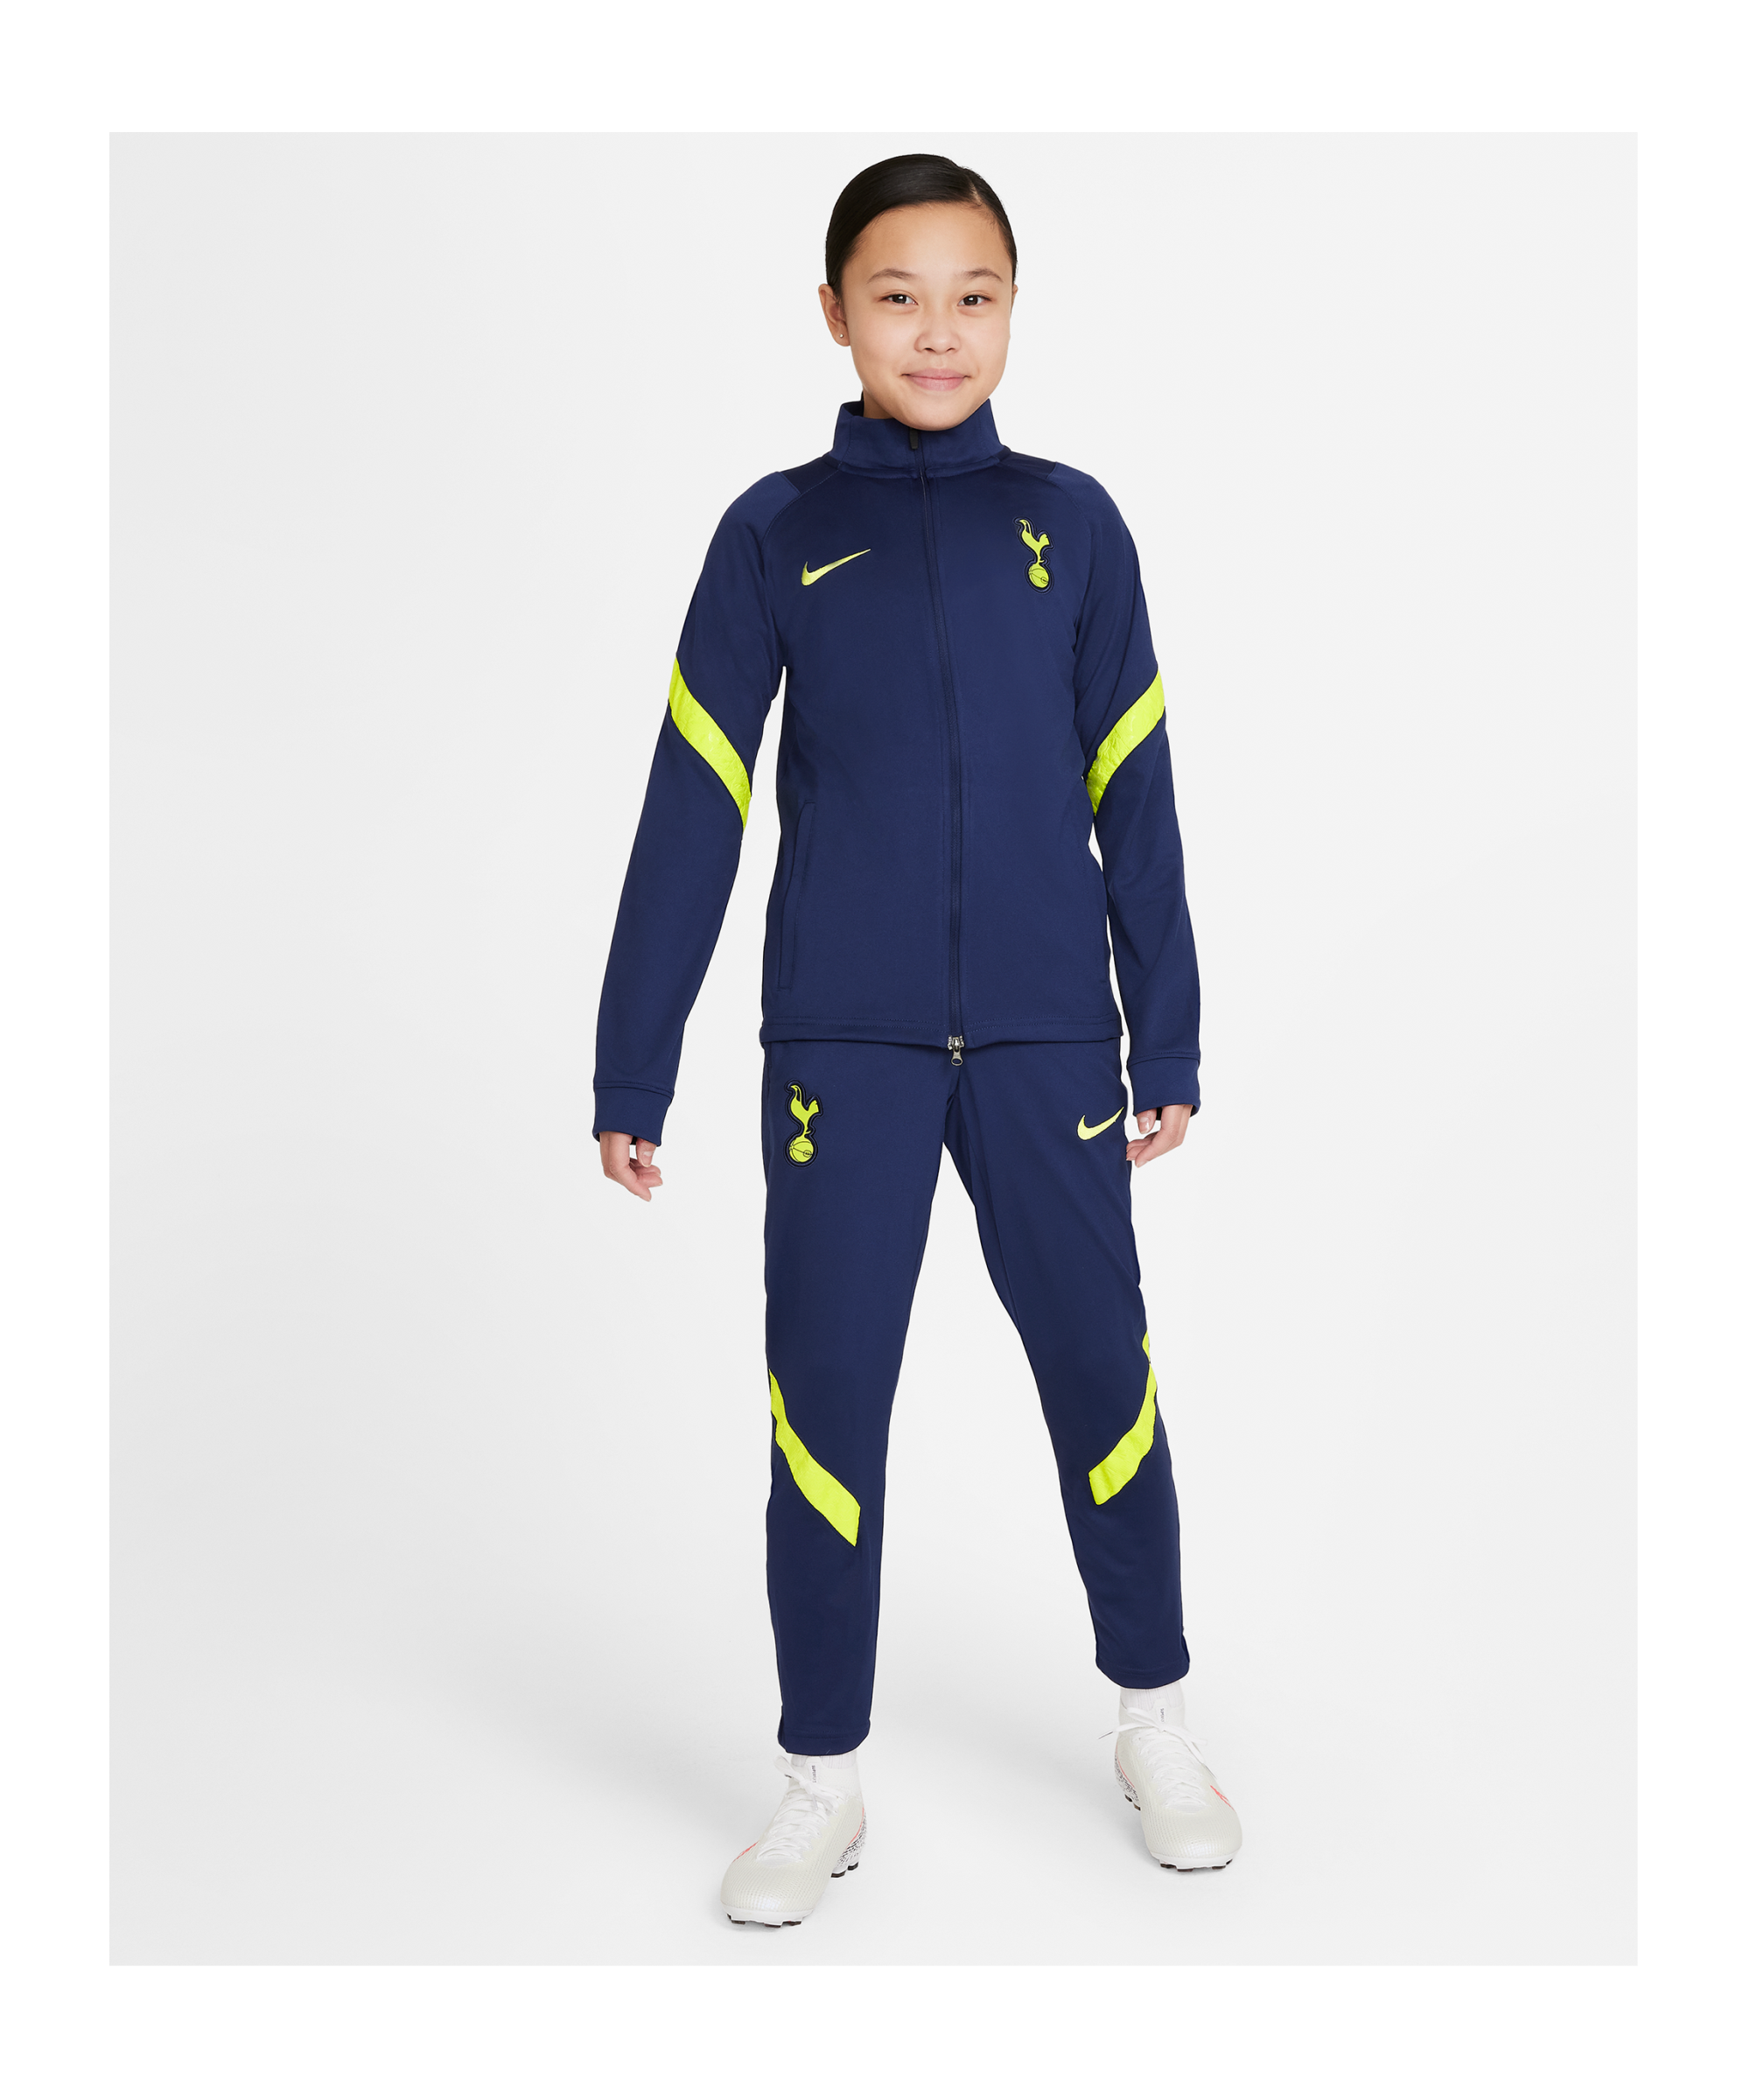 Kids - Tottenham Hotspur Soccer UCL Presentation Tracksuit 2019/20 - Nike Kids XL - 14+ Years